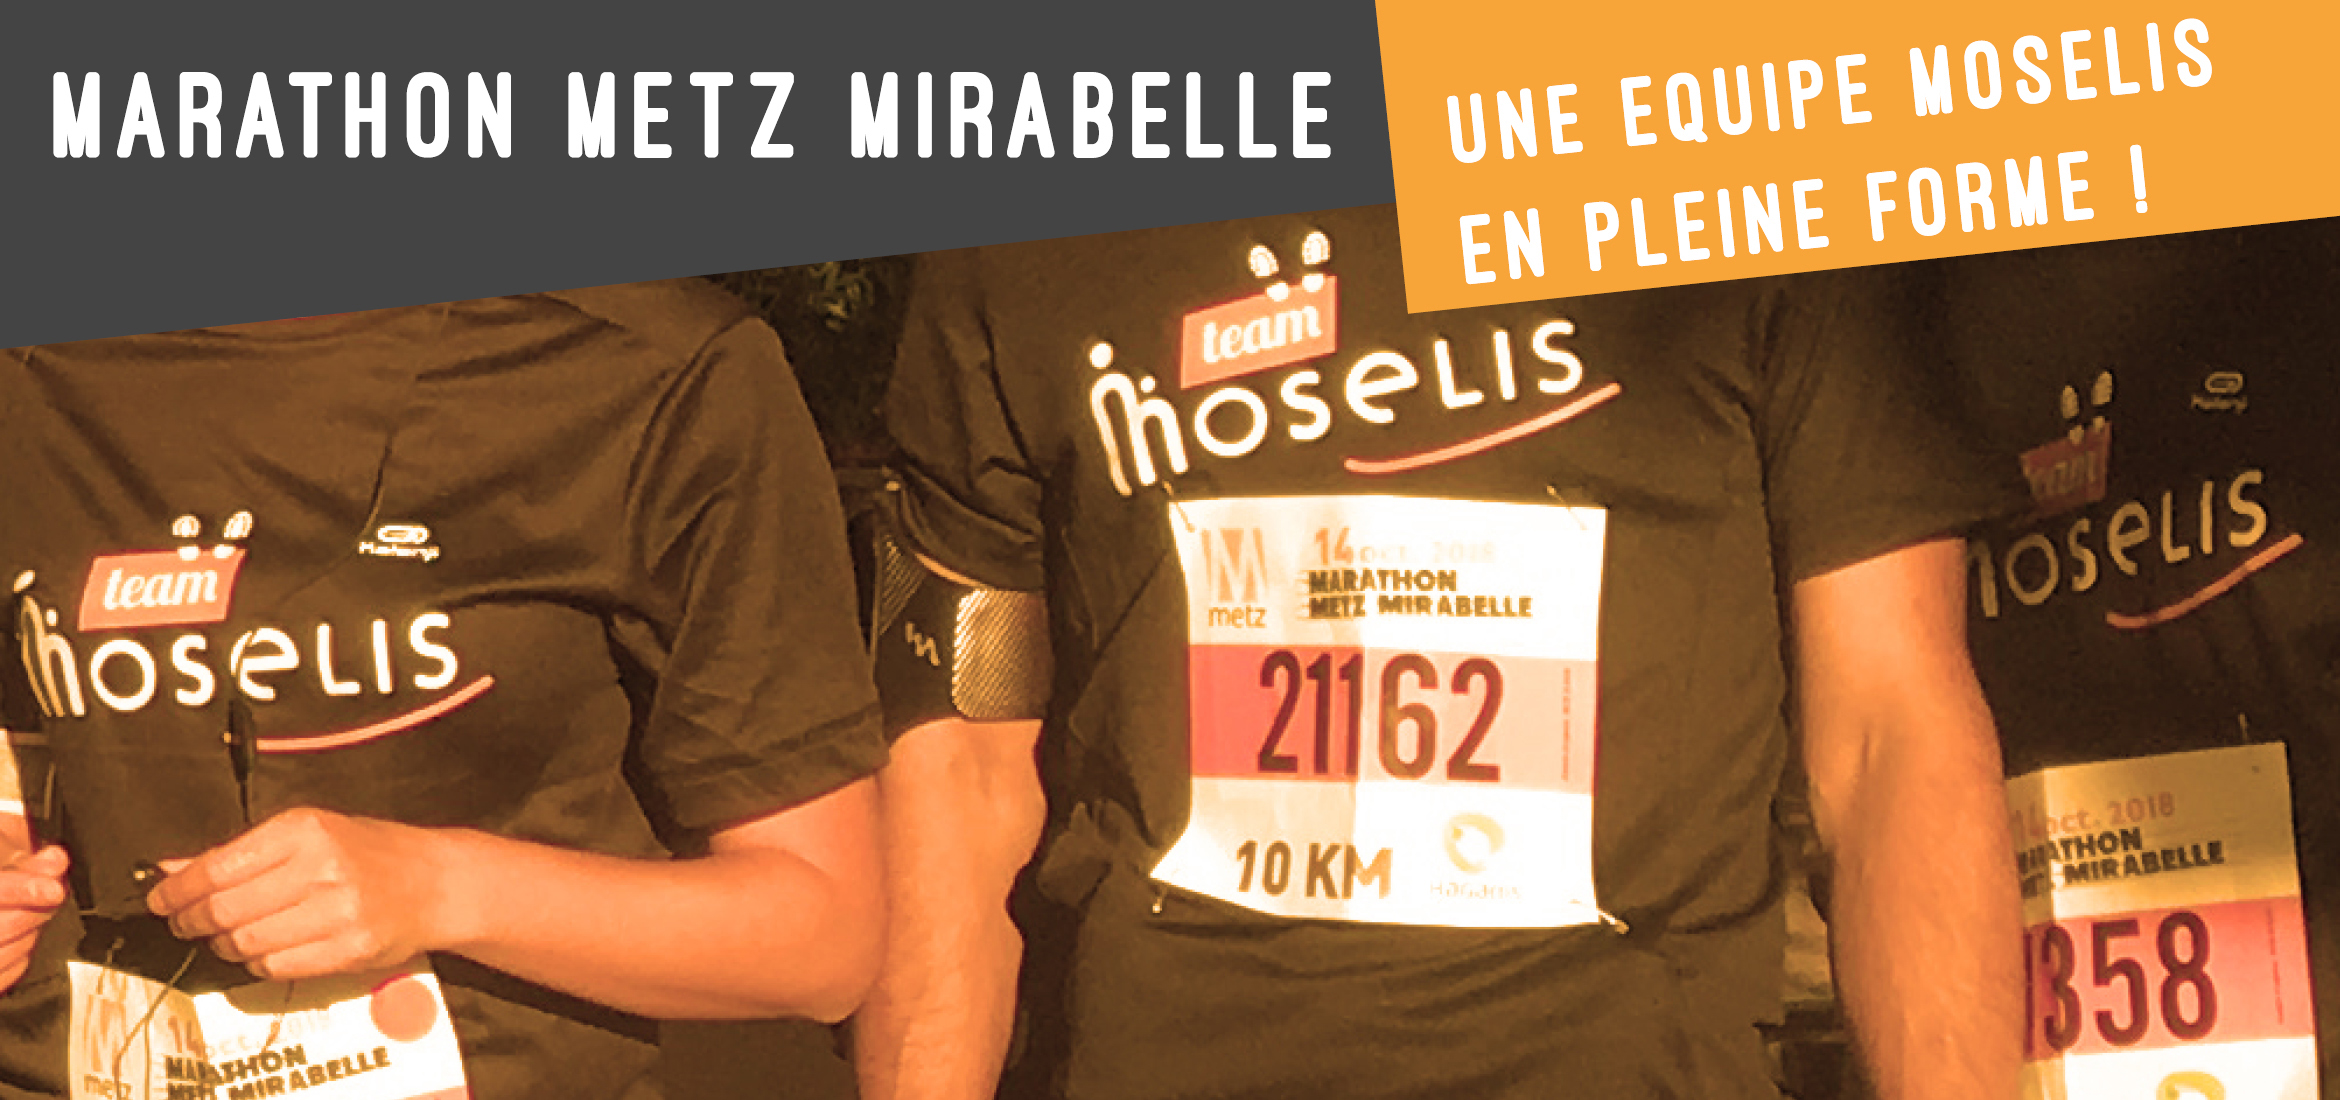 Marathon Metz Mirabelle, 2018, course 10 km Haganis, équipe Moselis, team Moselis